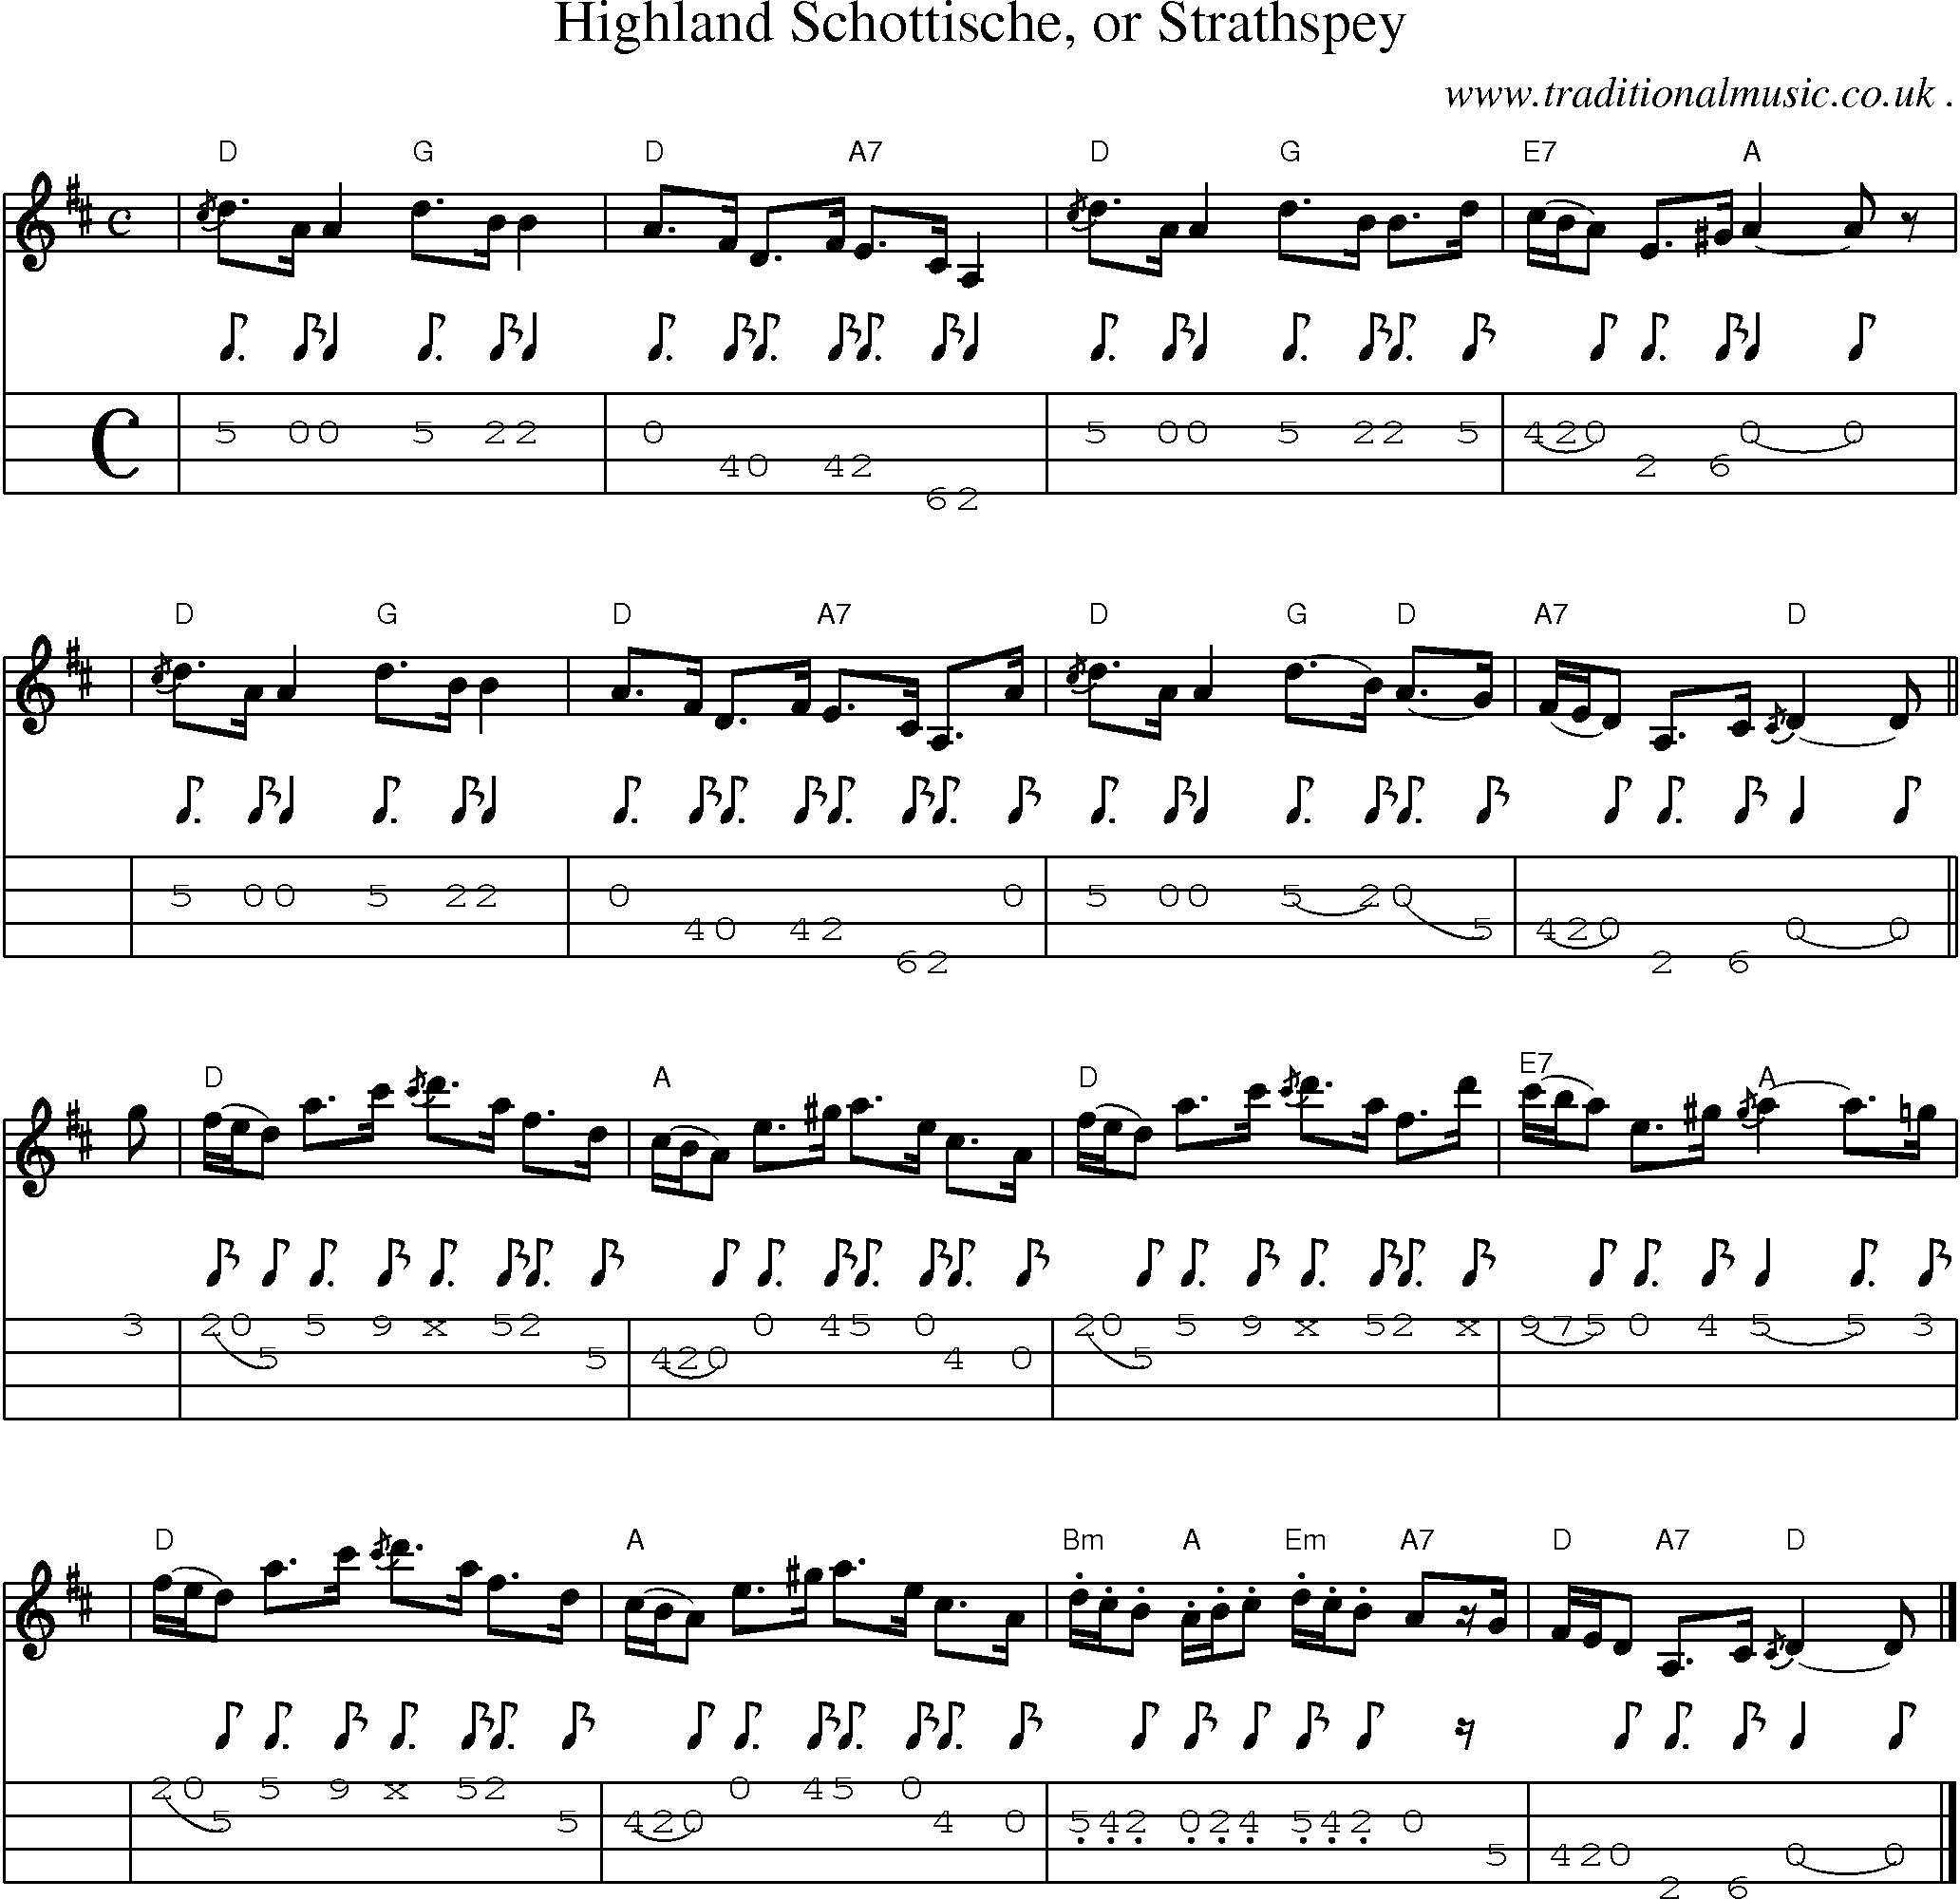 Sheet-music  score, Chords and Mandolin Tabs for Highland Schottische Or Strathspey